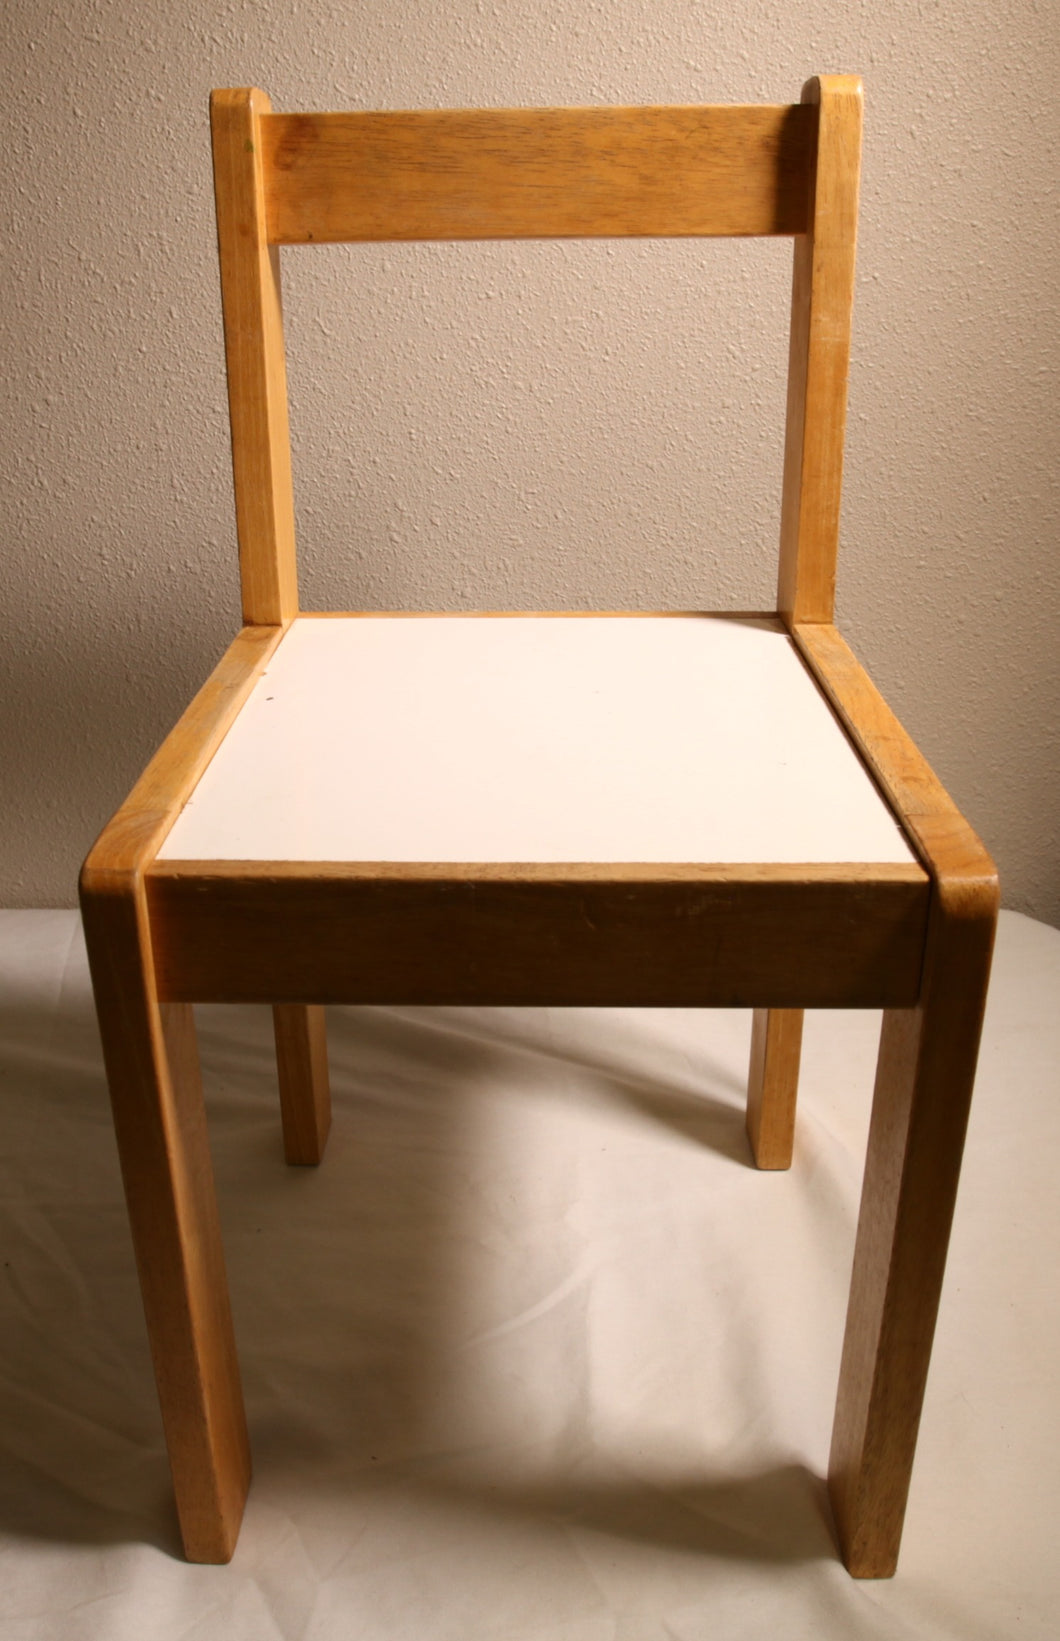 Wooden Chair #8: 11.5